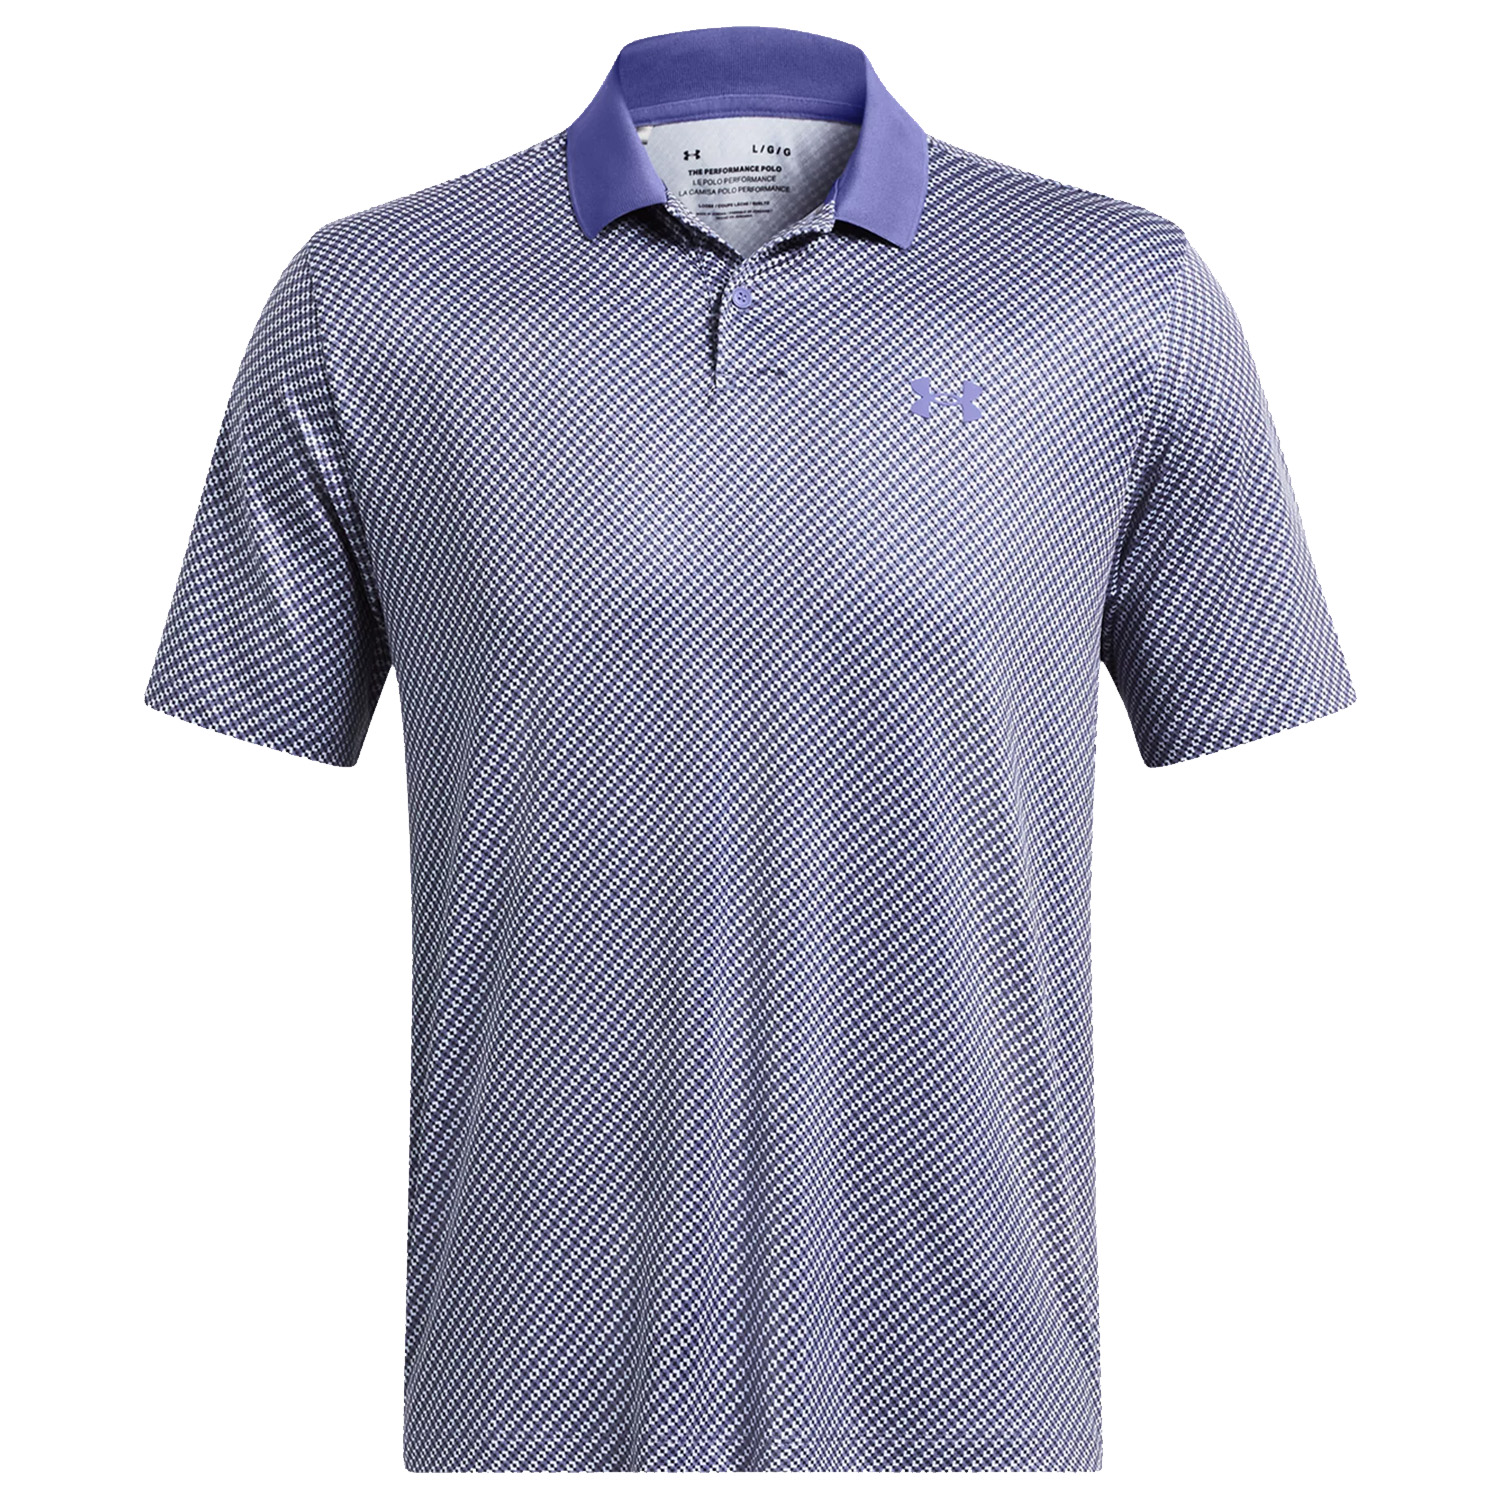 Under Armour Golf Performance 3.0 Mens Printed Polo Shirt  - Starlight/Celeste